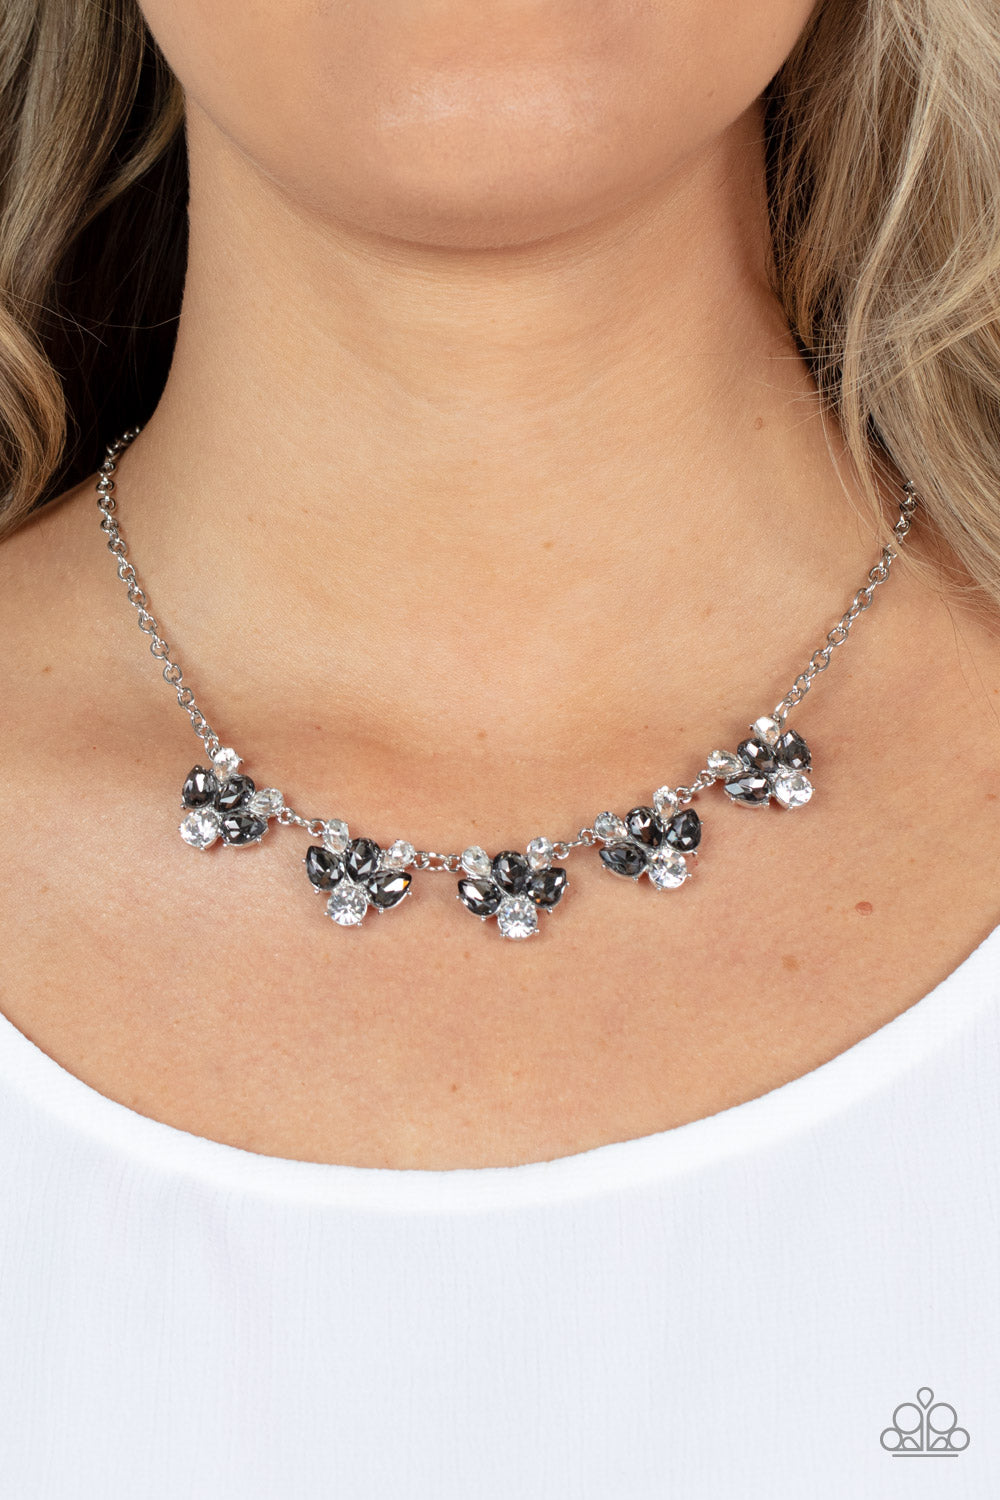 Envious Elegance - Silver Necklace - Paparazzi Accessories